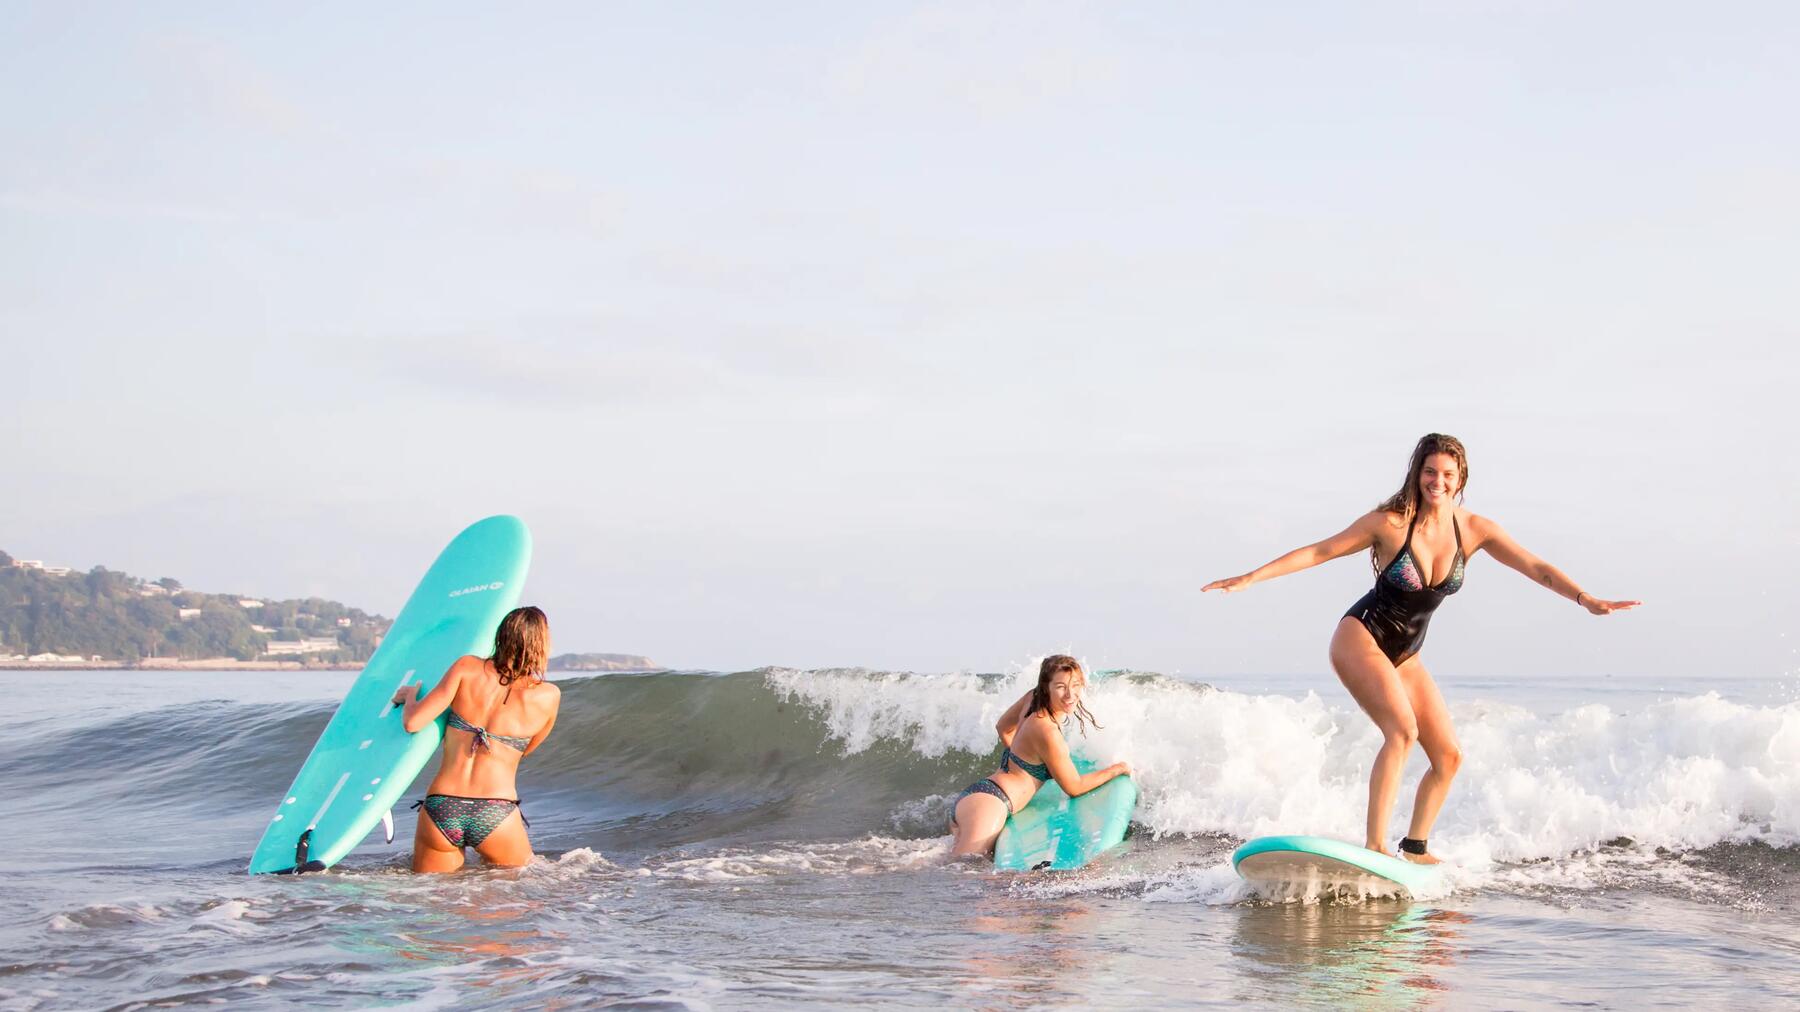 Surf a foamie - Soft top surfboard